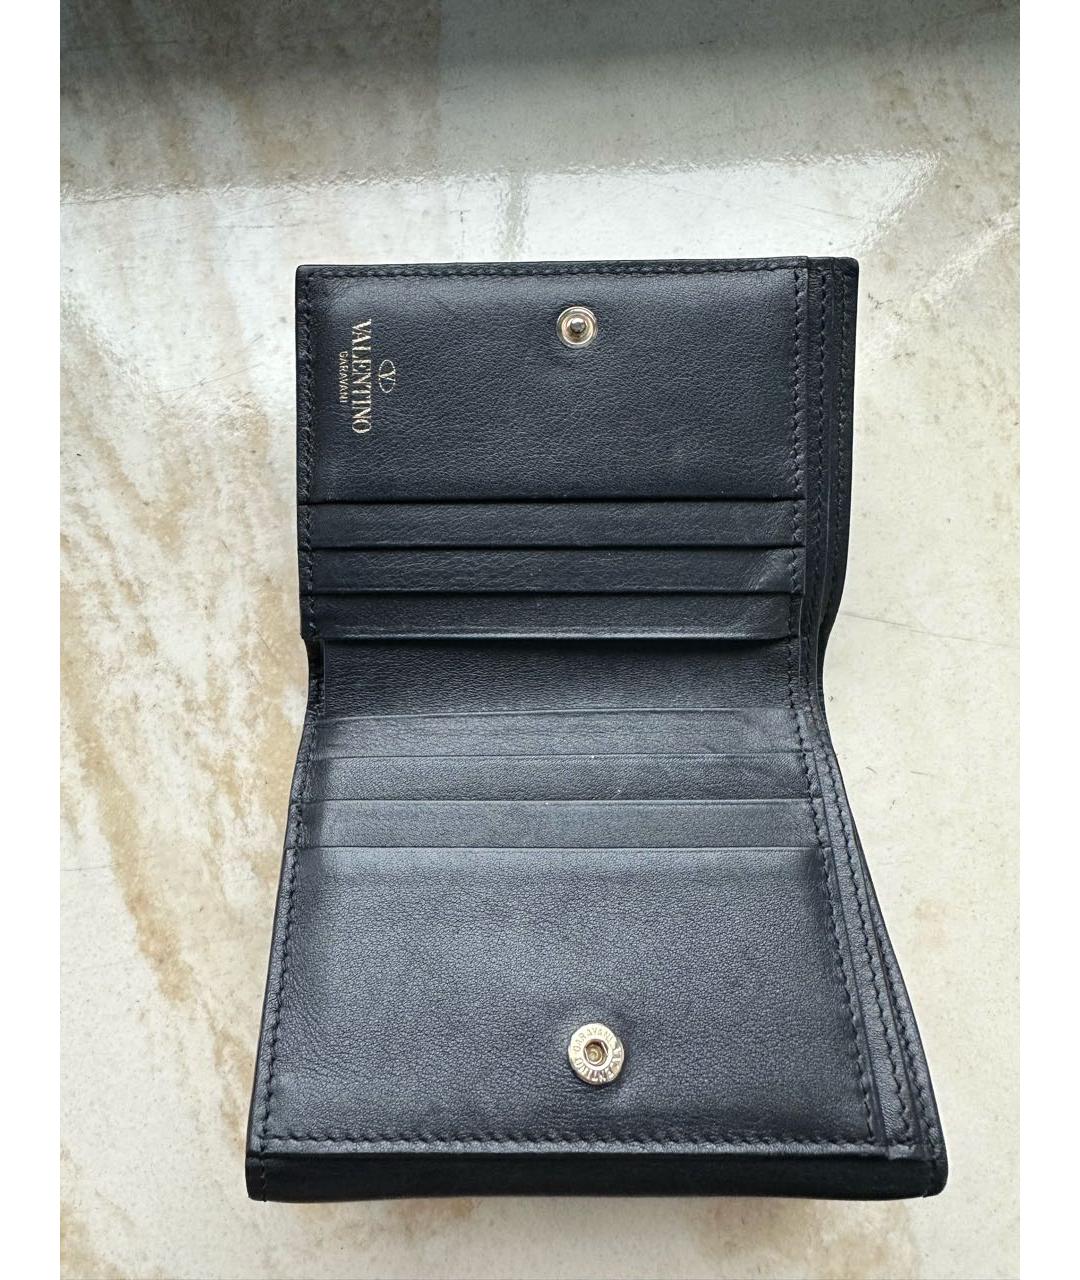 VALENTINO Черный кожаный кошелек, фото 3